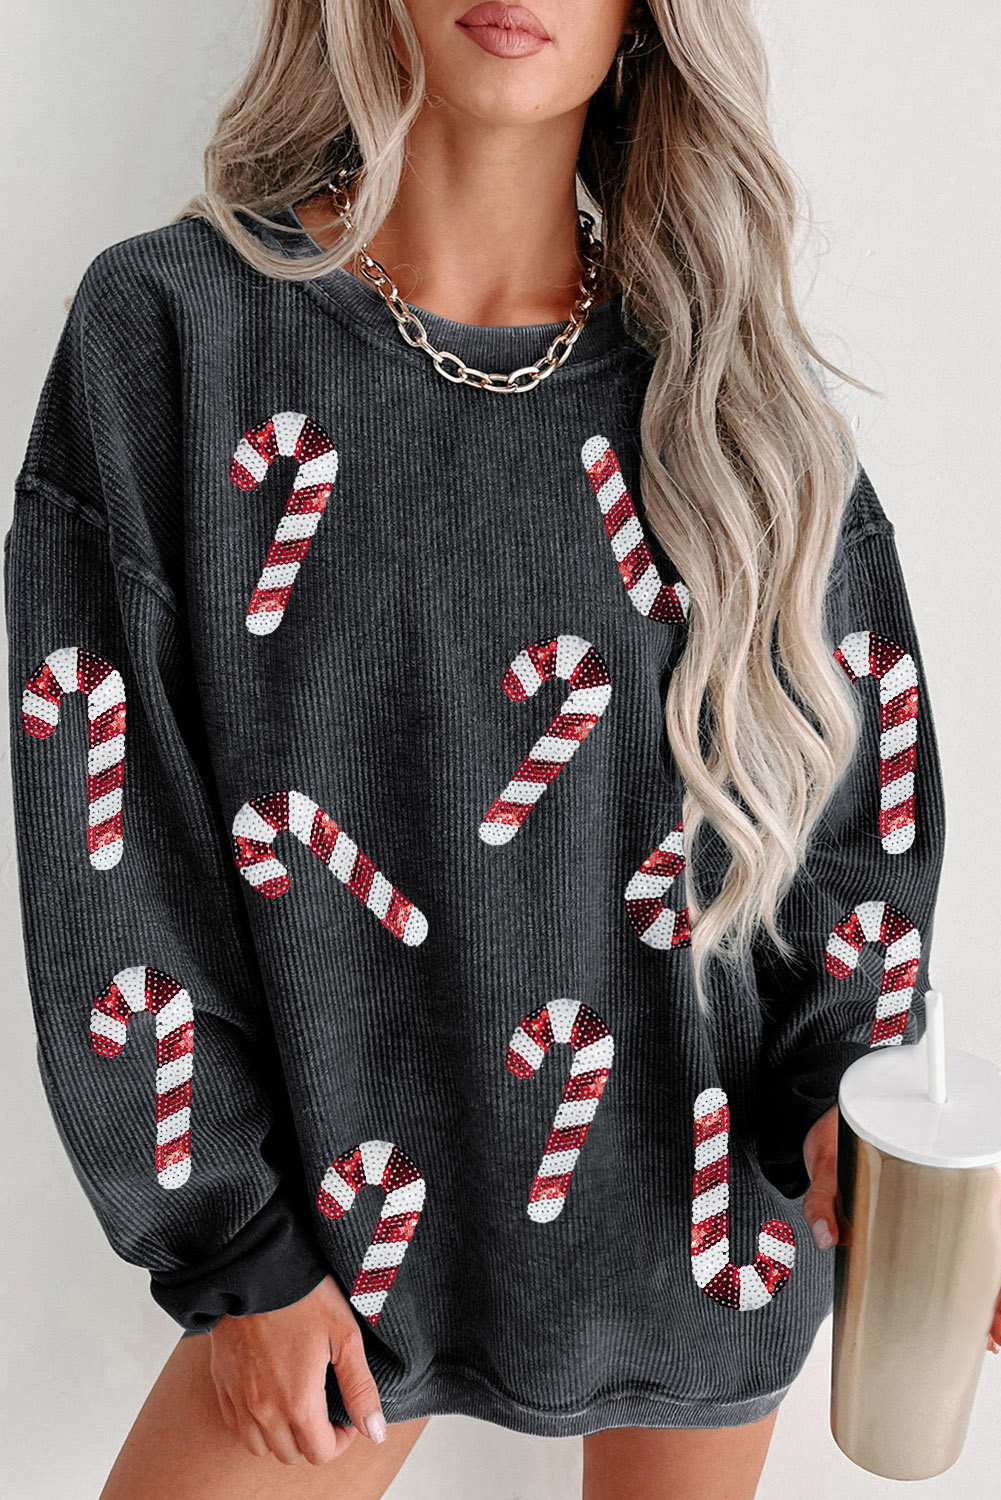 Shewin Wholesale Lady Black Xmas CANDY Cane Shining Graphic Corded Sweatshirt